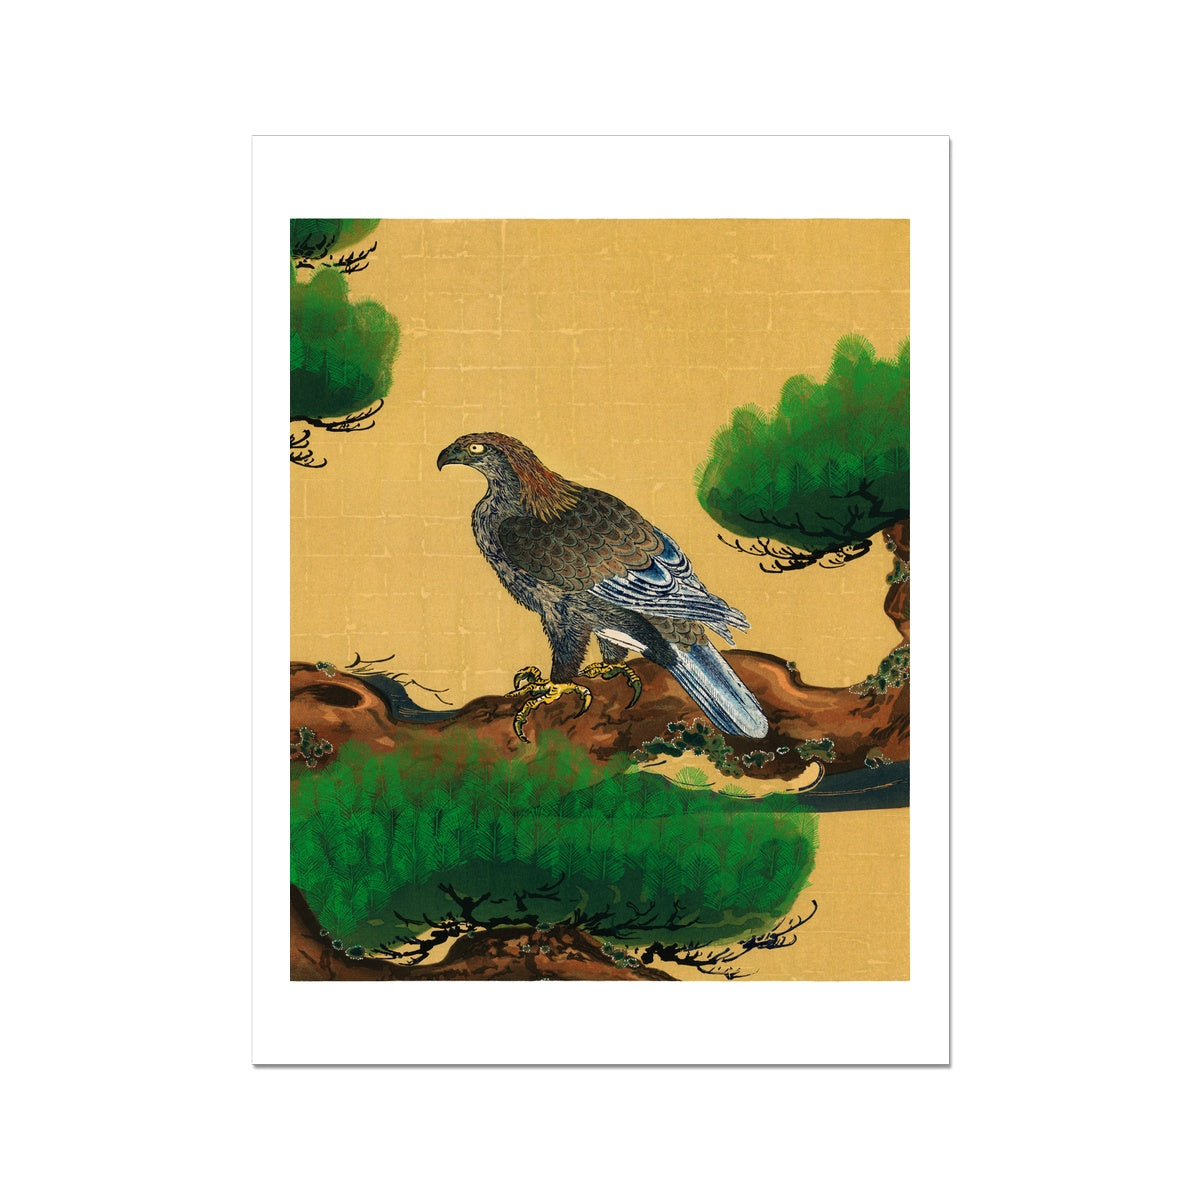 Pine and Eagle from Kano Tanyu by Utagawa Hiroshige Fine Art Print Fine Art Print